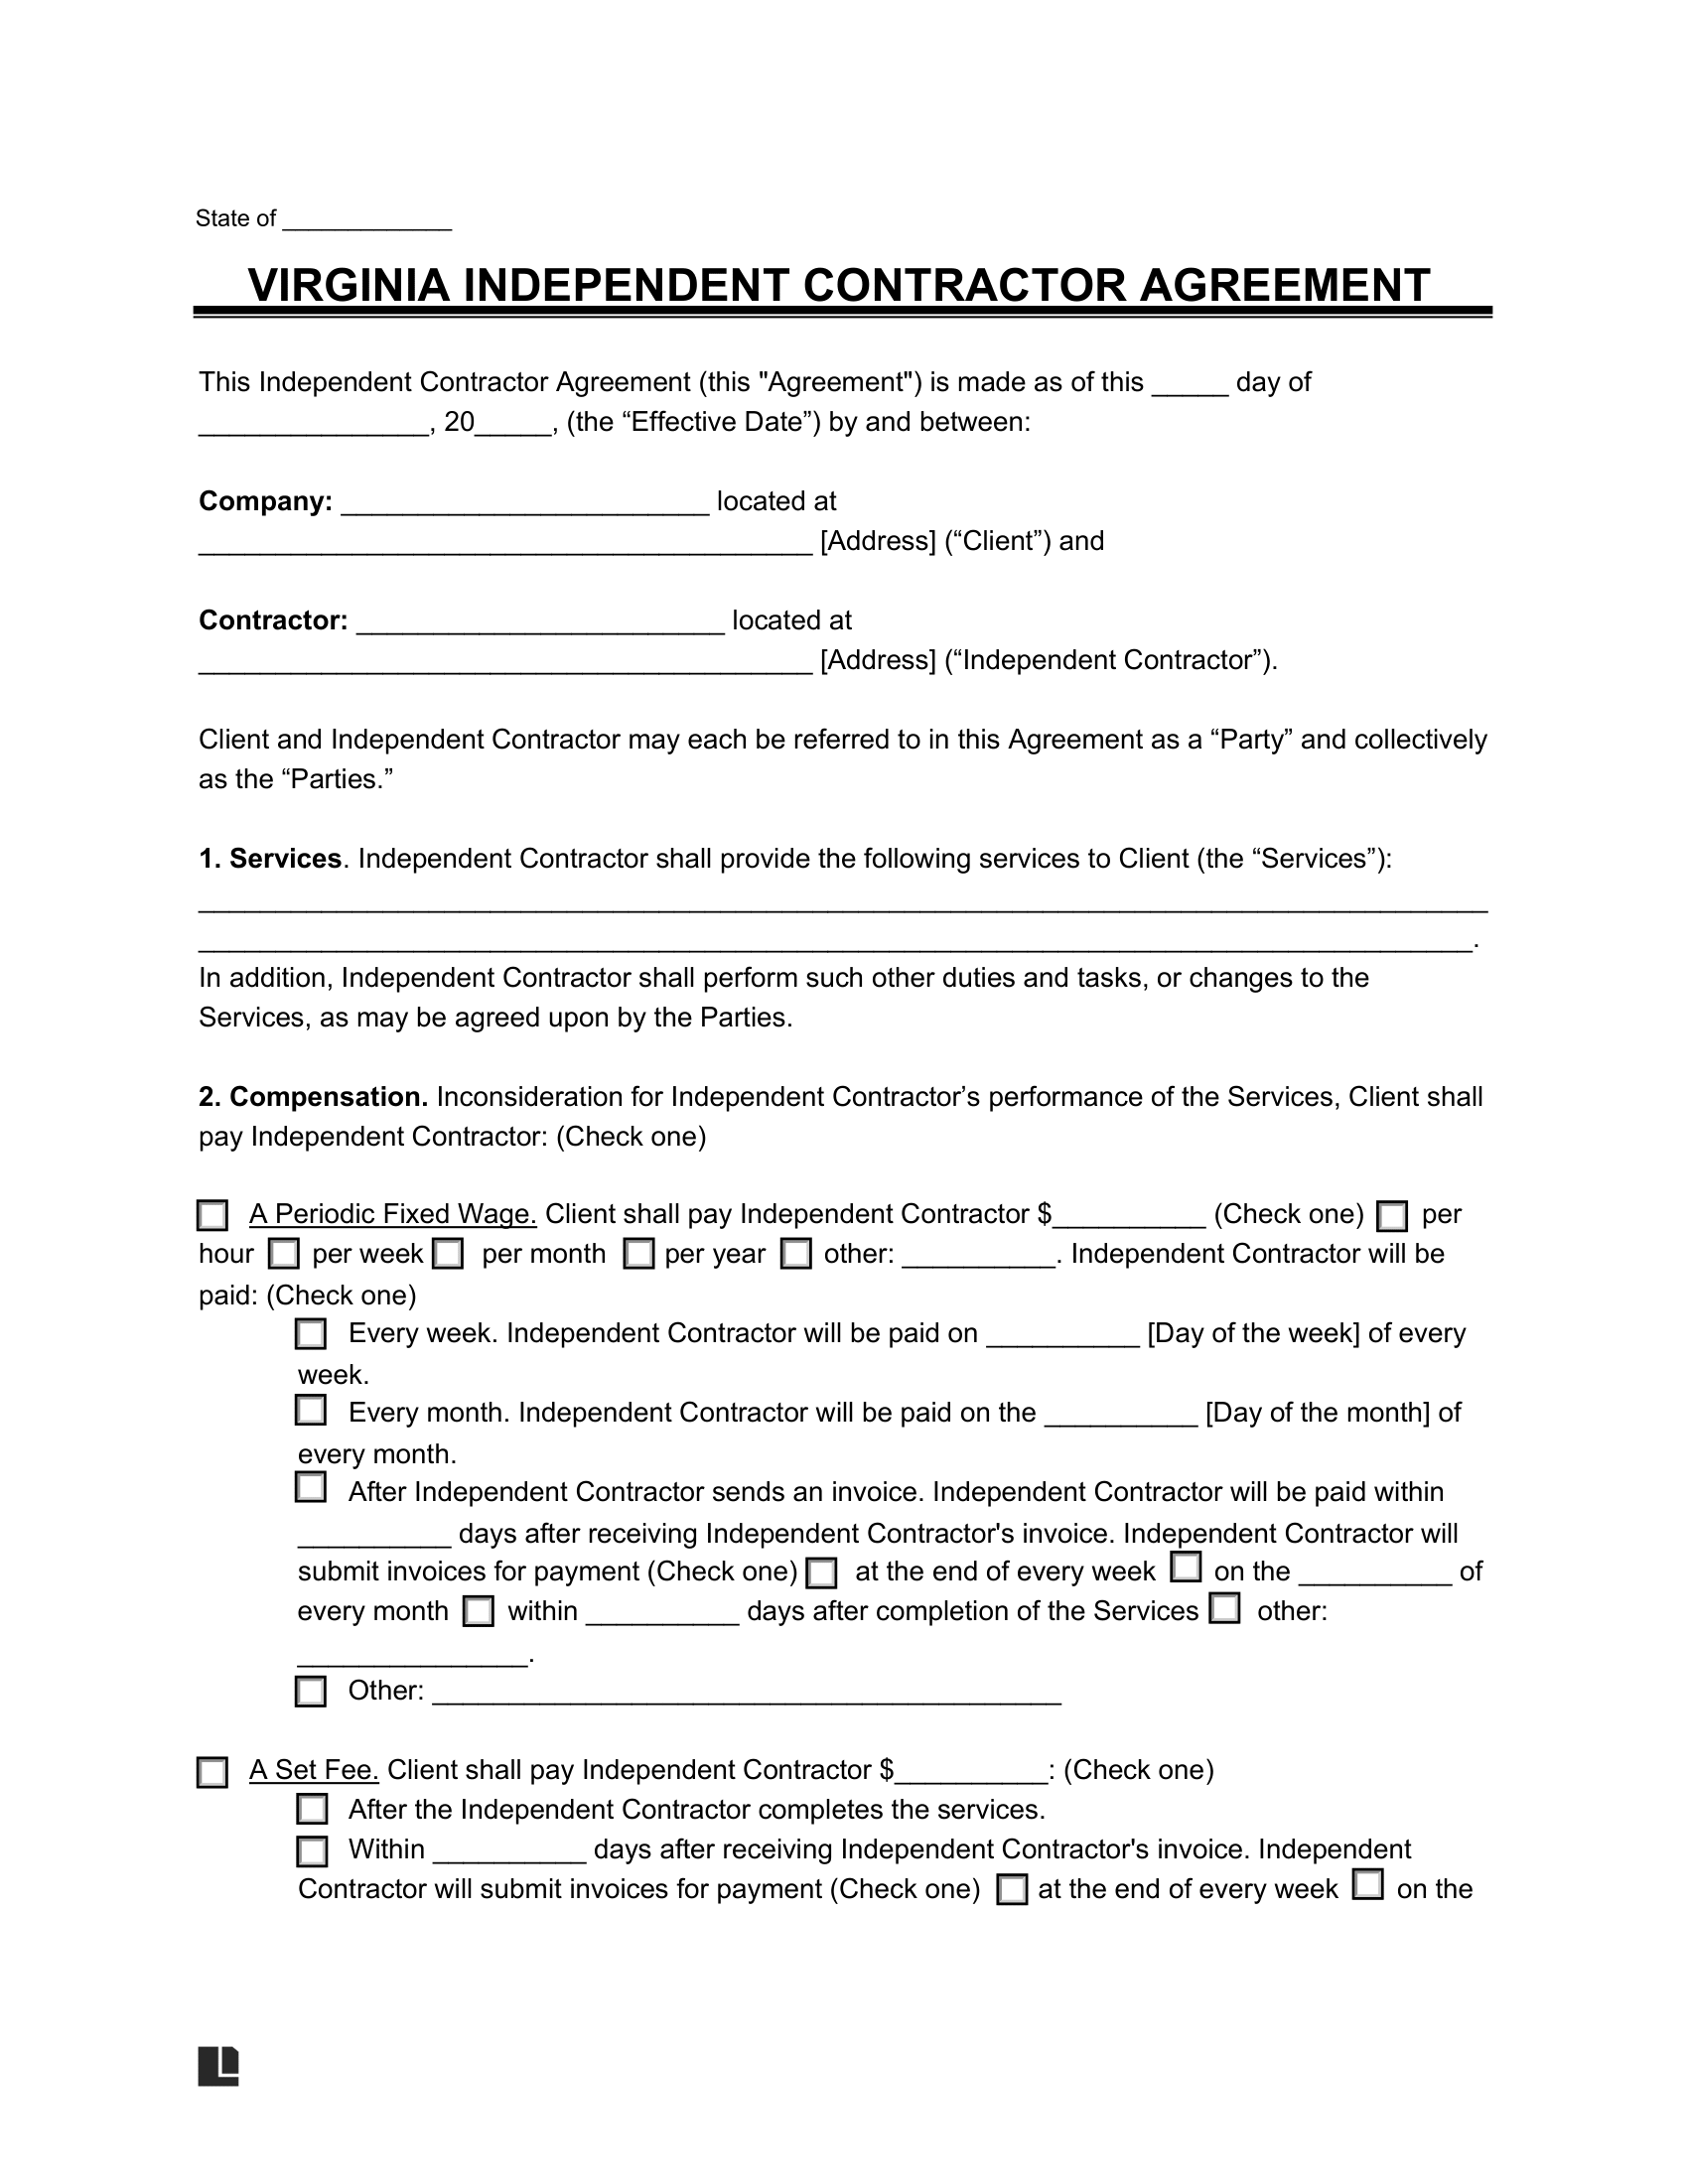 Virginia Independent Contractor Agreement